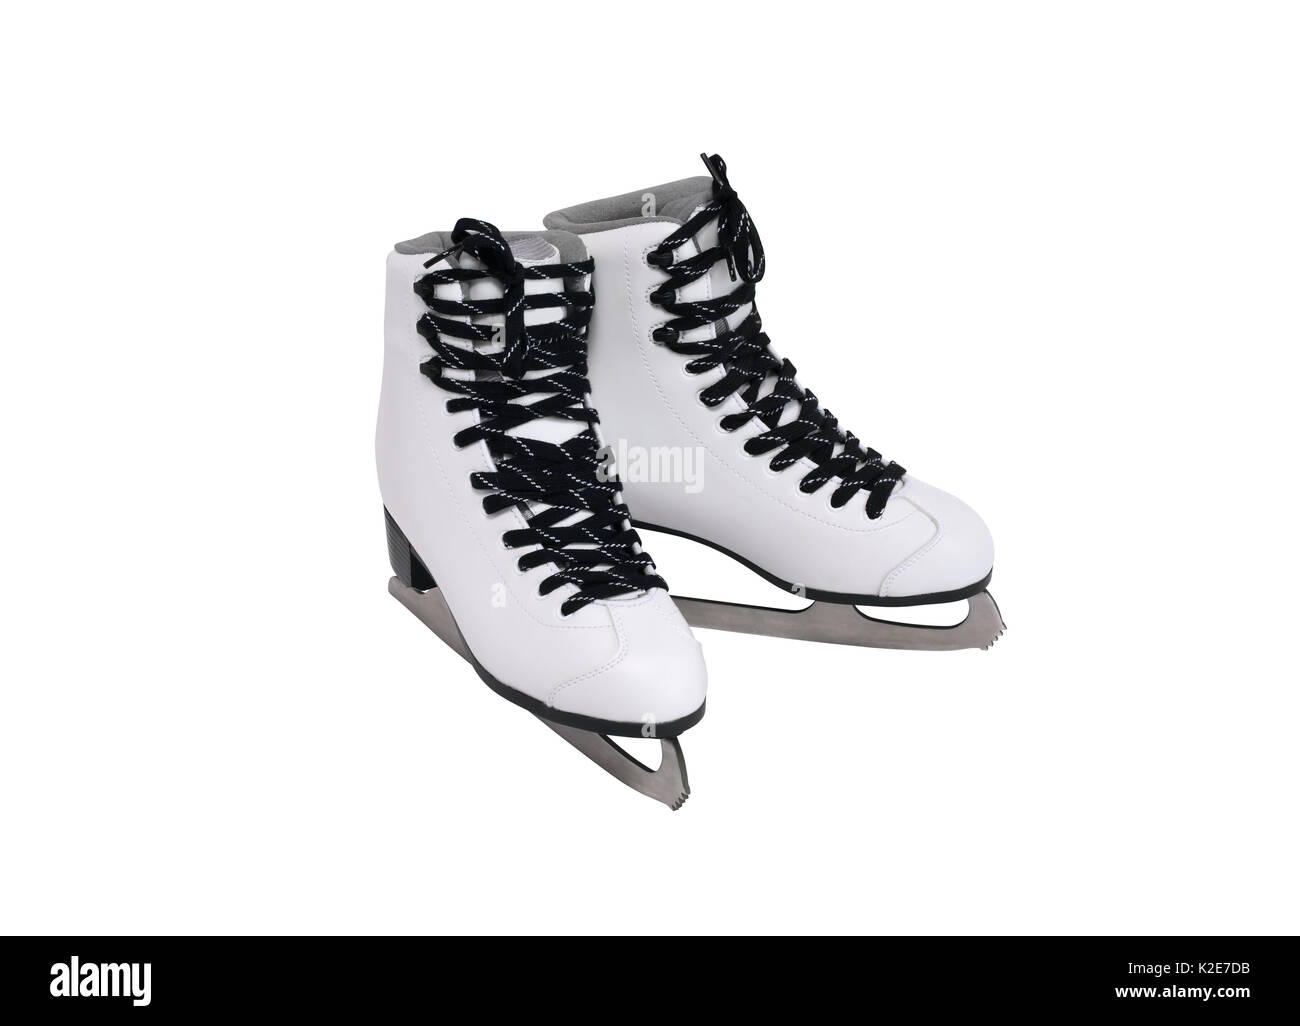 Nouveau livre blanc femme chaussures de patinage sur glace. Isolated on white with clipping path Banque D'Images